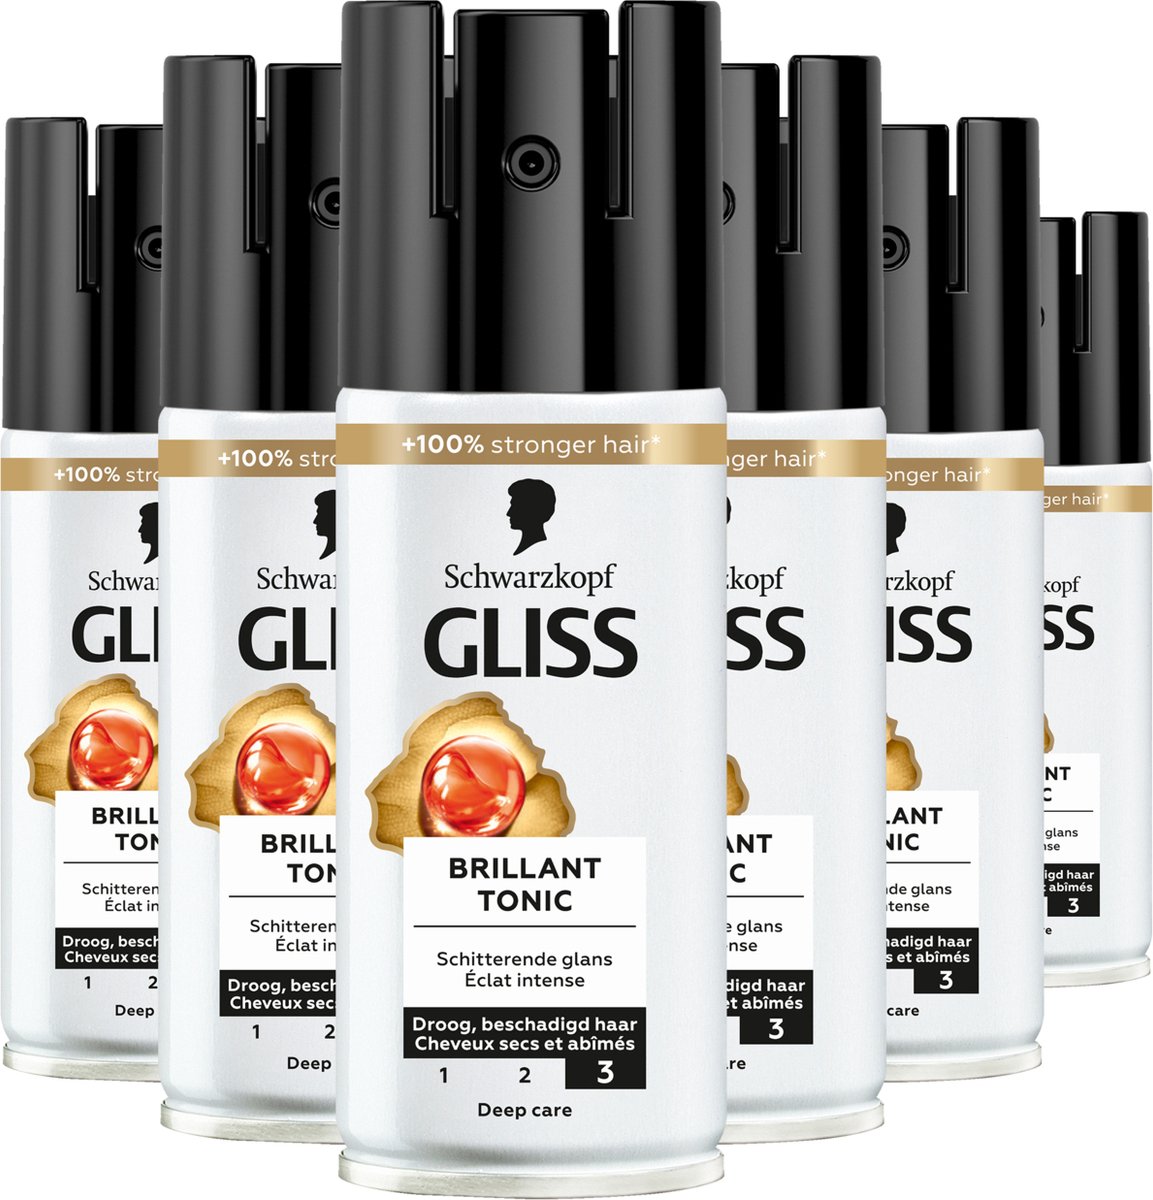 Gliss Kur Total Repair 19 Tonic 100 ml - 6 stuks - Voordeelverpakking